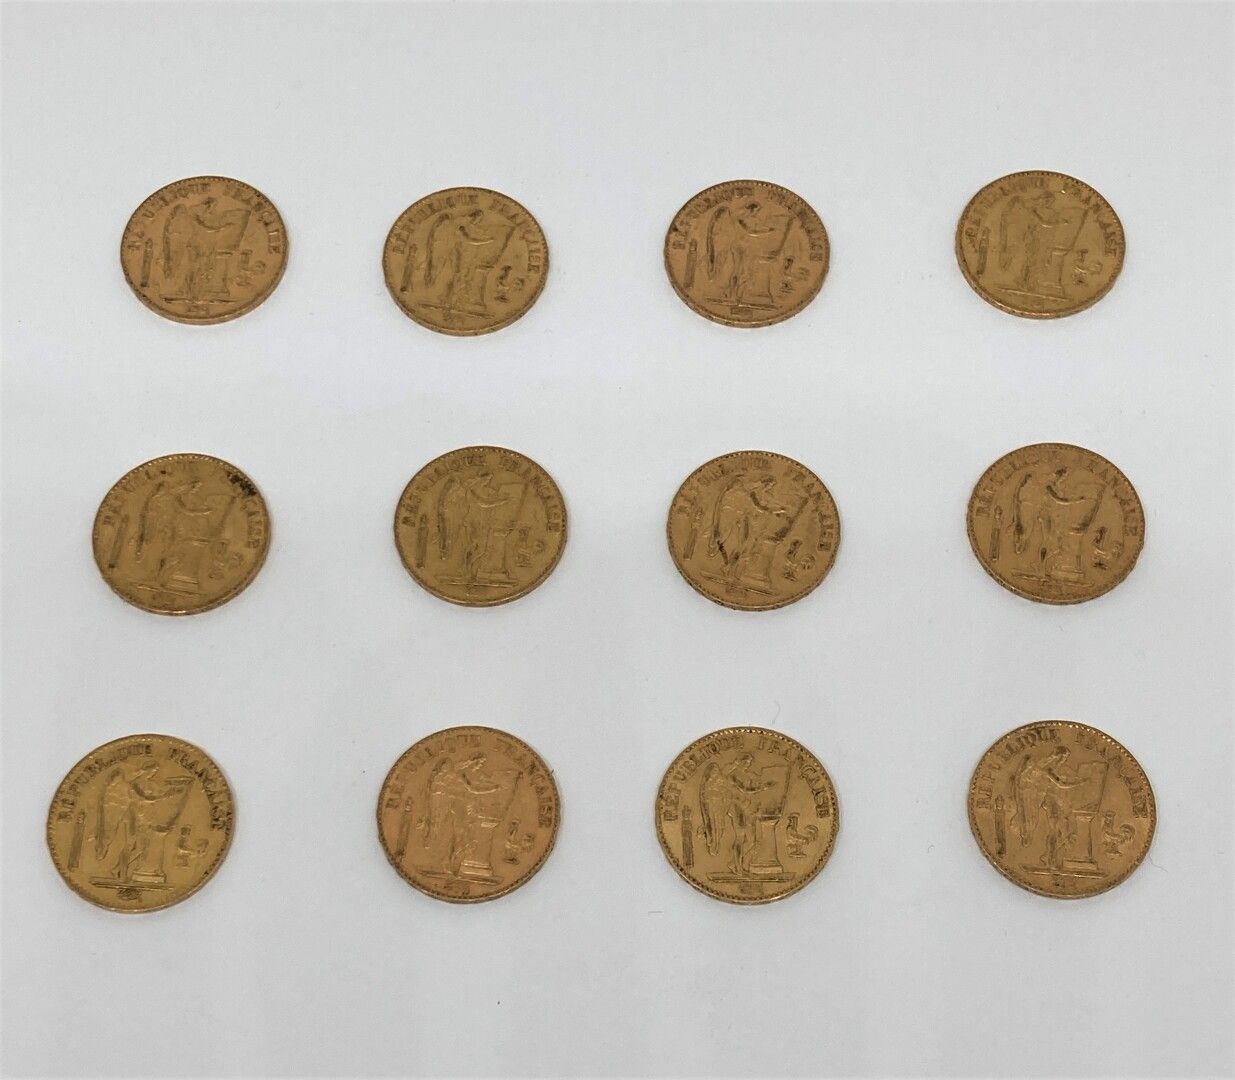 Null 12枚20法郎的金币 第三共和国的Genie

- 2 of 1876 A

- 1895 A

- 2 of 1878 A

- 1848 A

-&hellip;